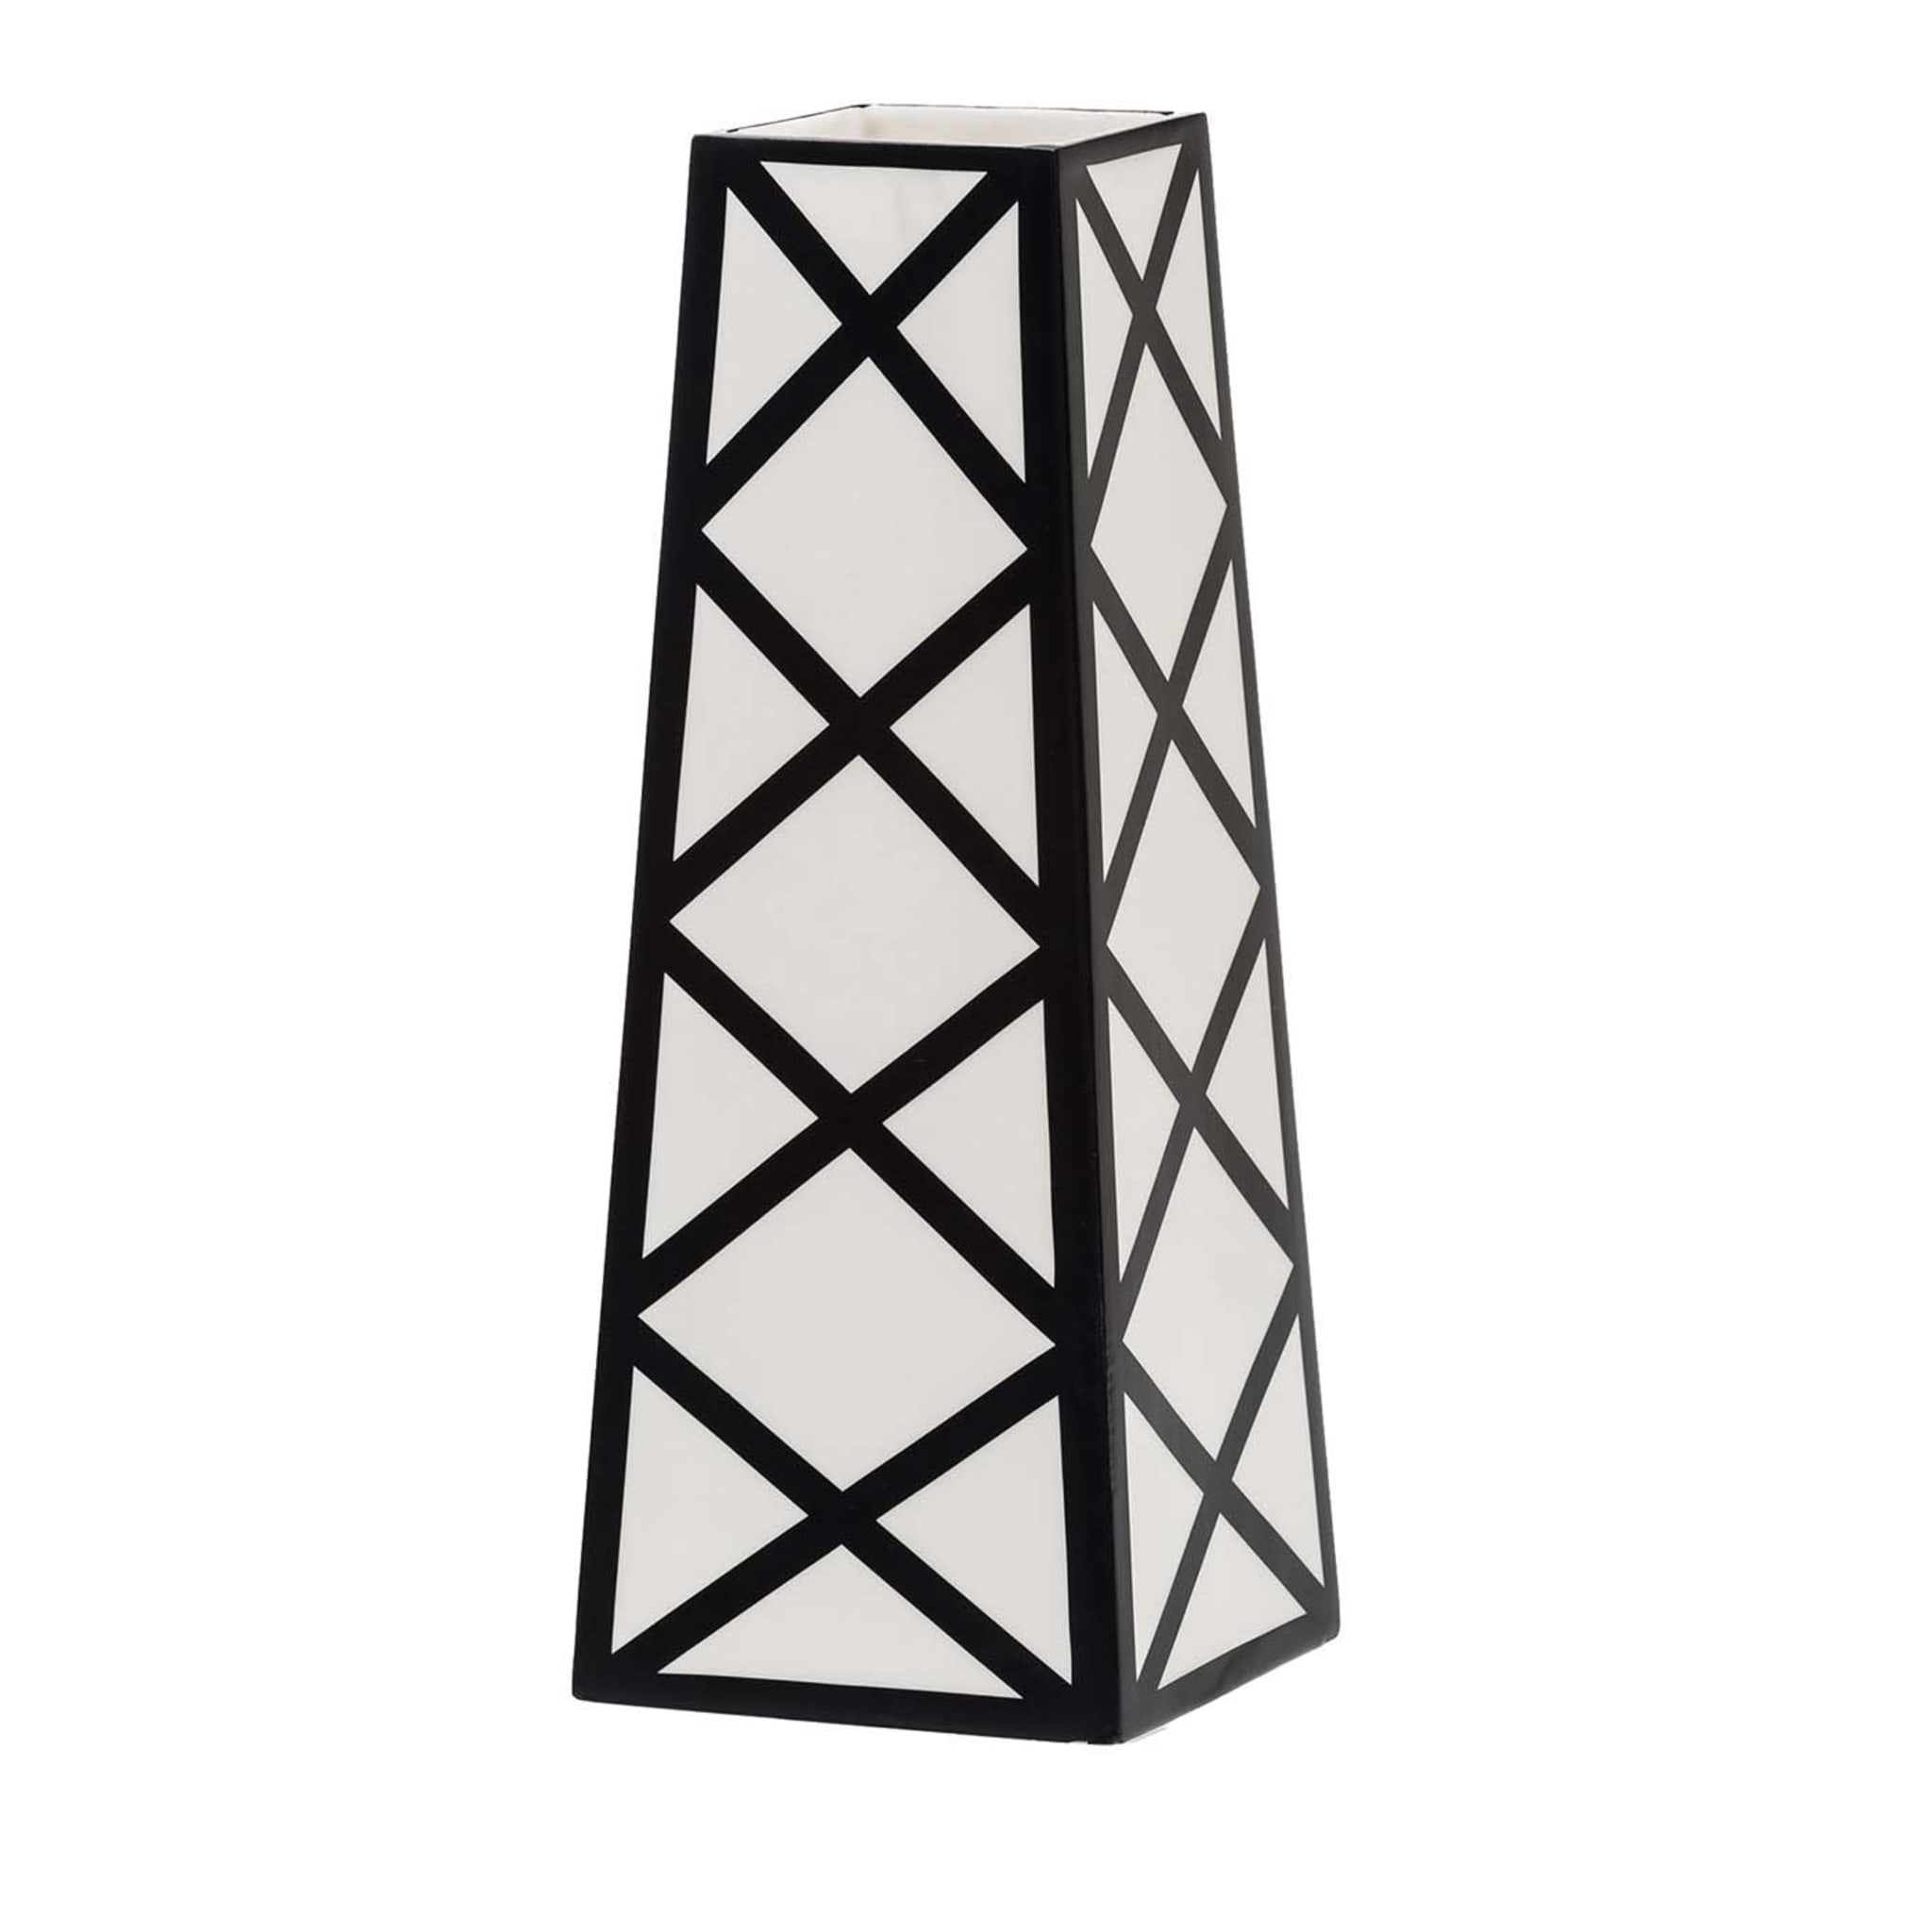 Giugno Ceramic Vase by George Sowden - Post Design - Main view